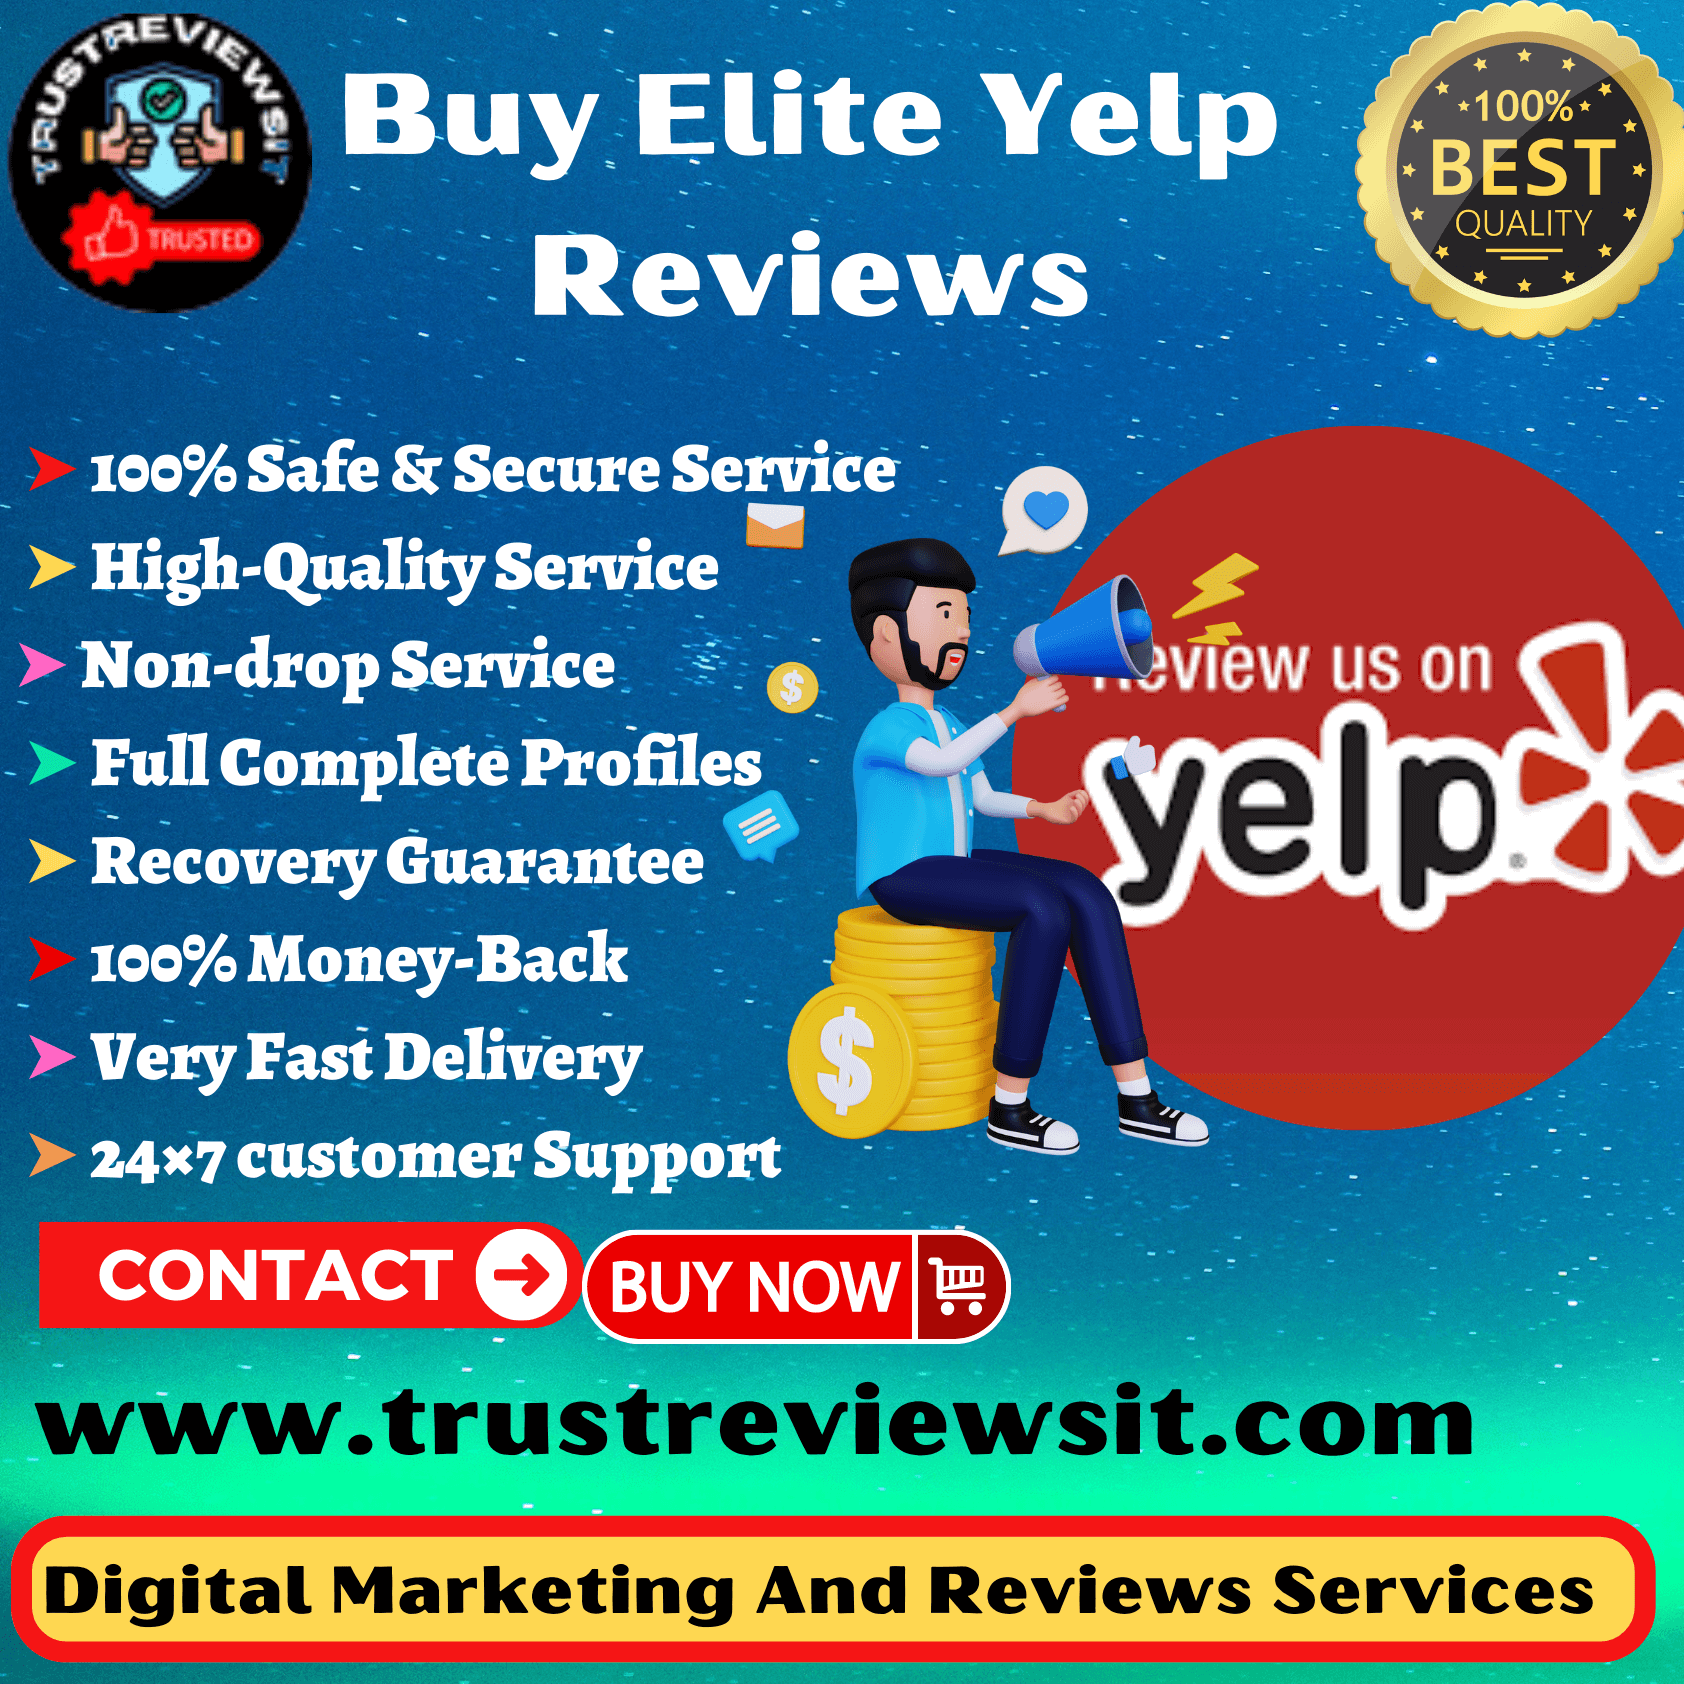 Buy Elite Yelp Reviews - Trust Reviews IT